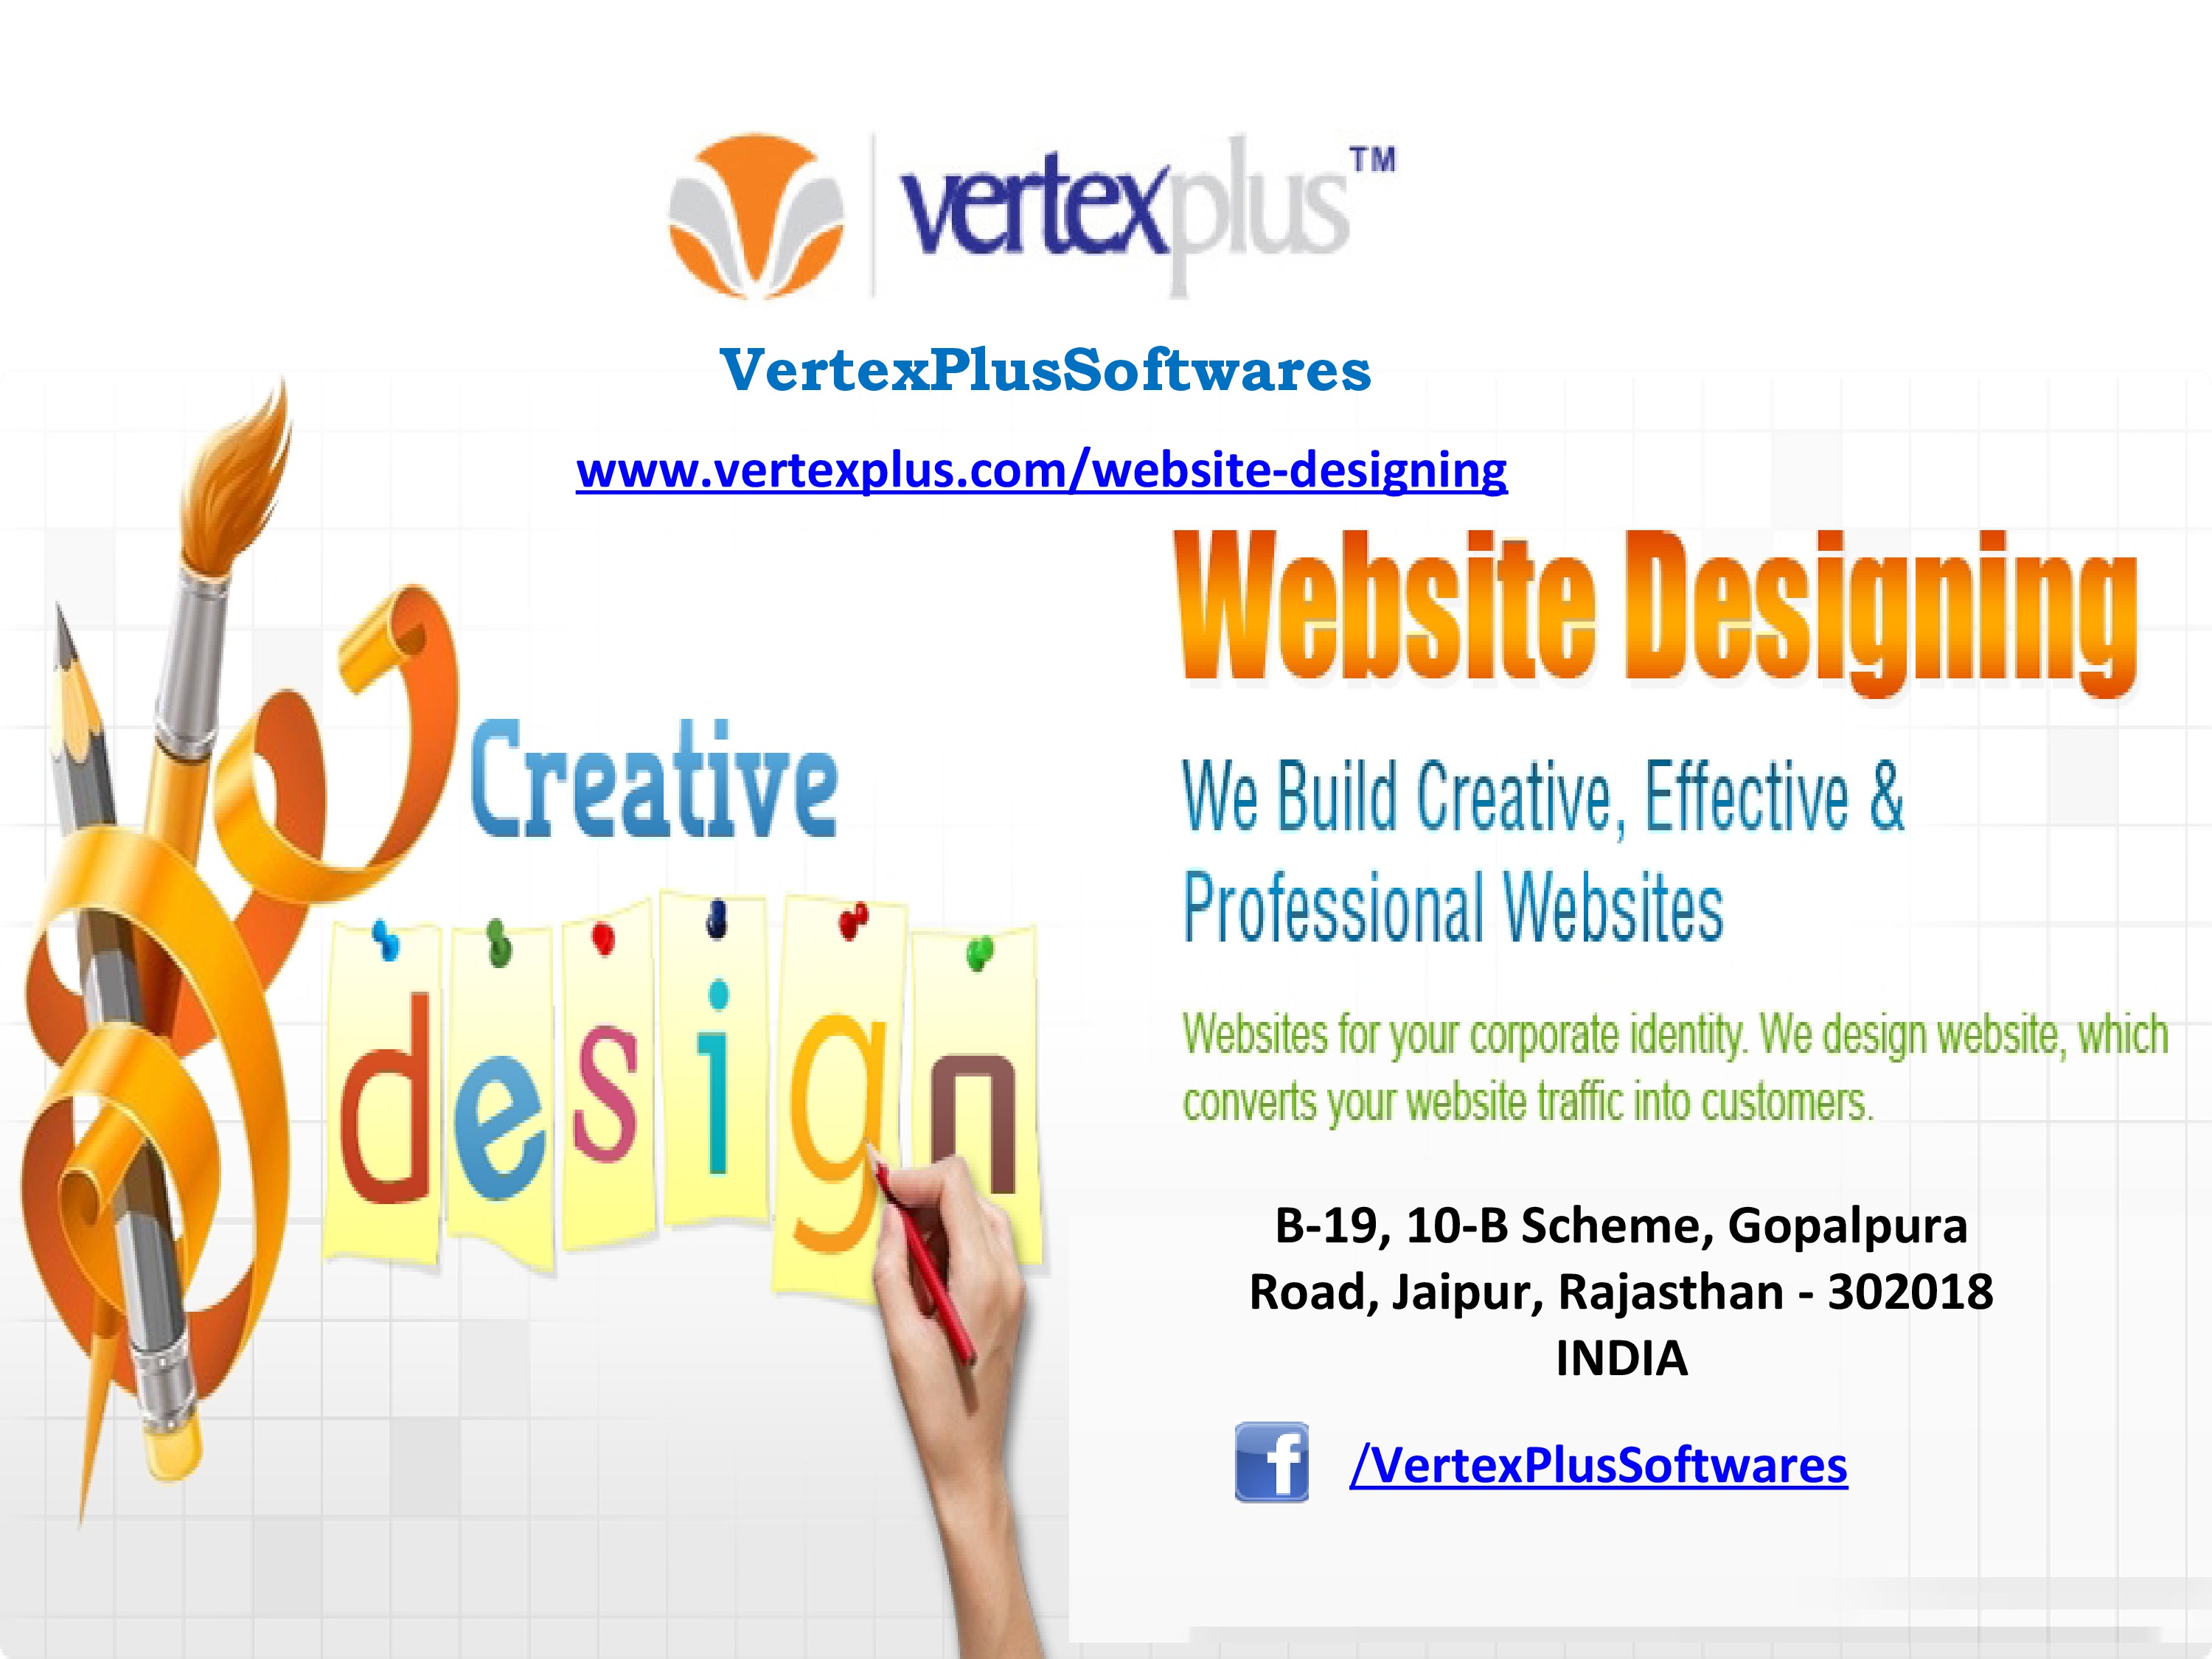 Web Designing Company.jpg  by vertexplus